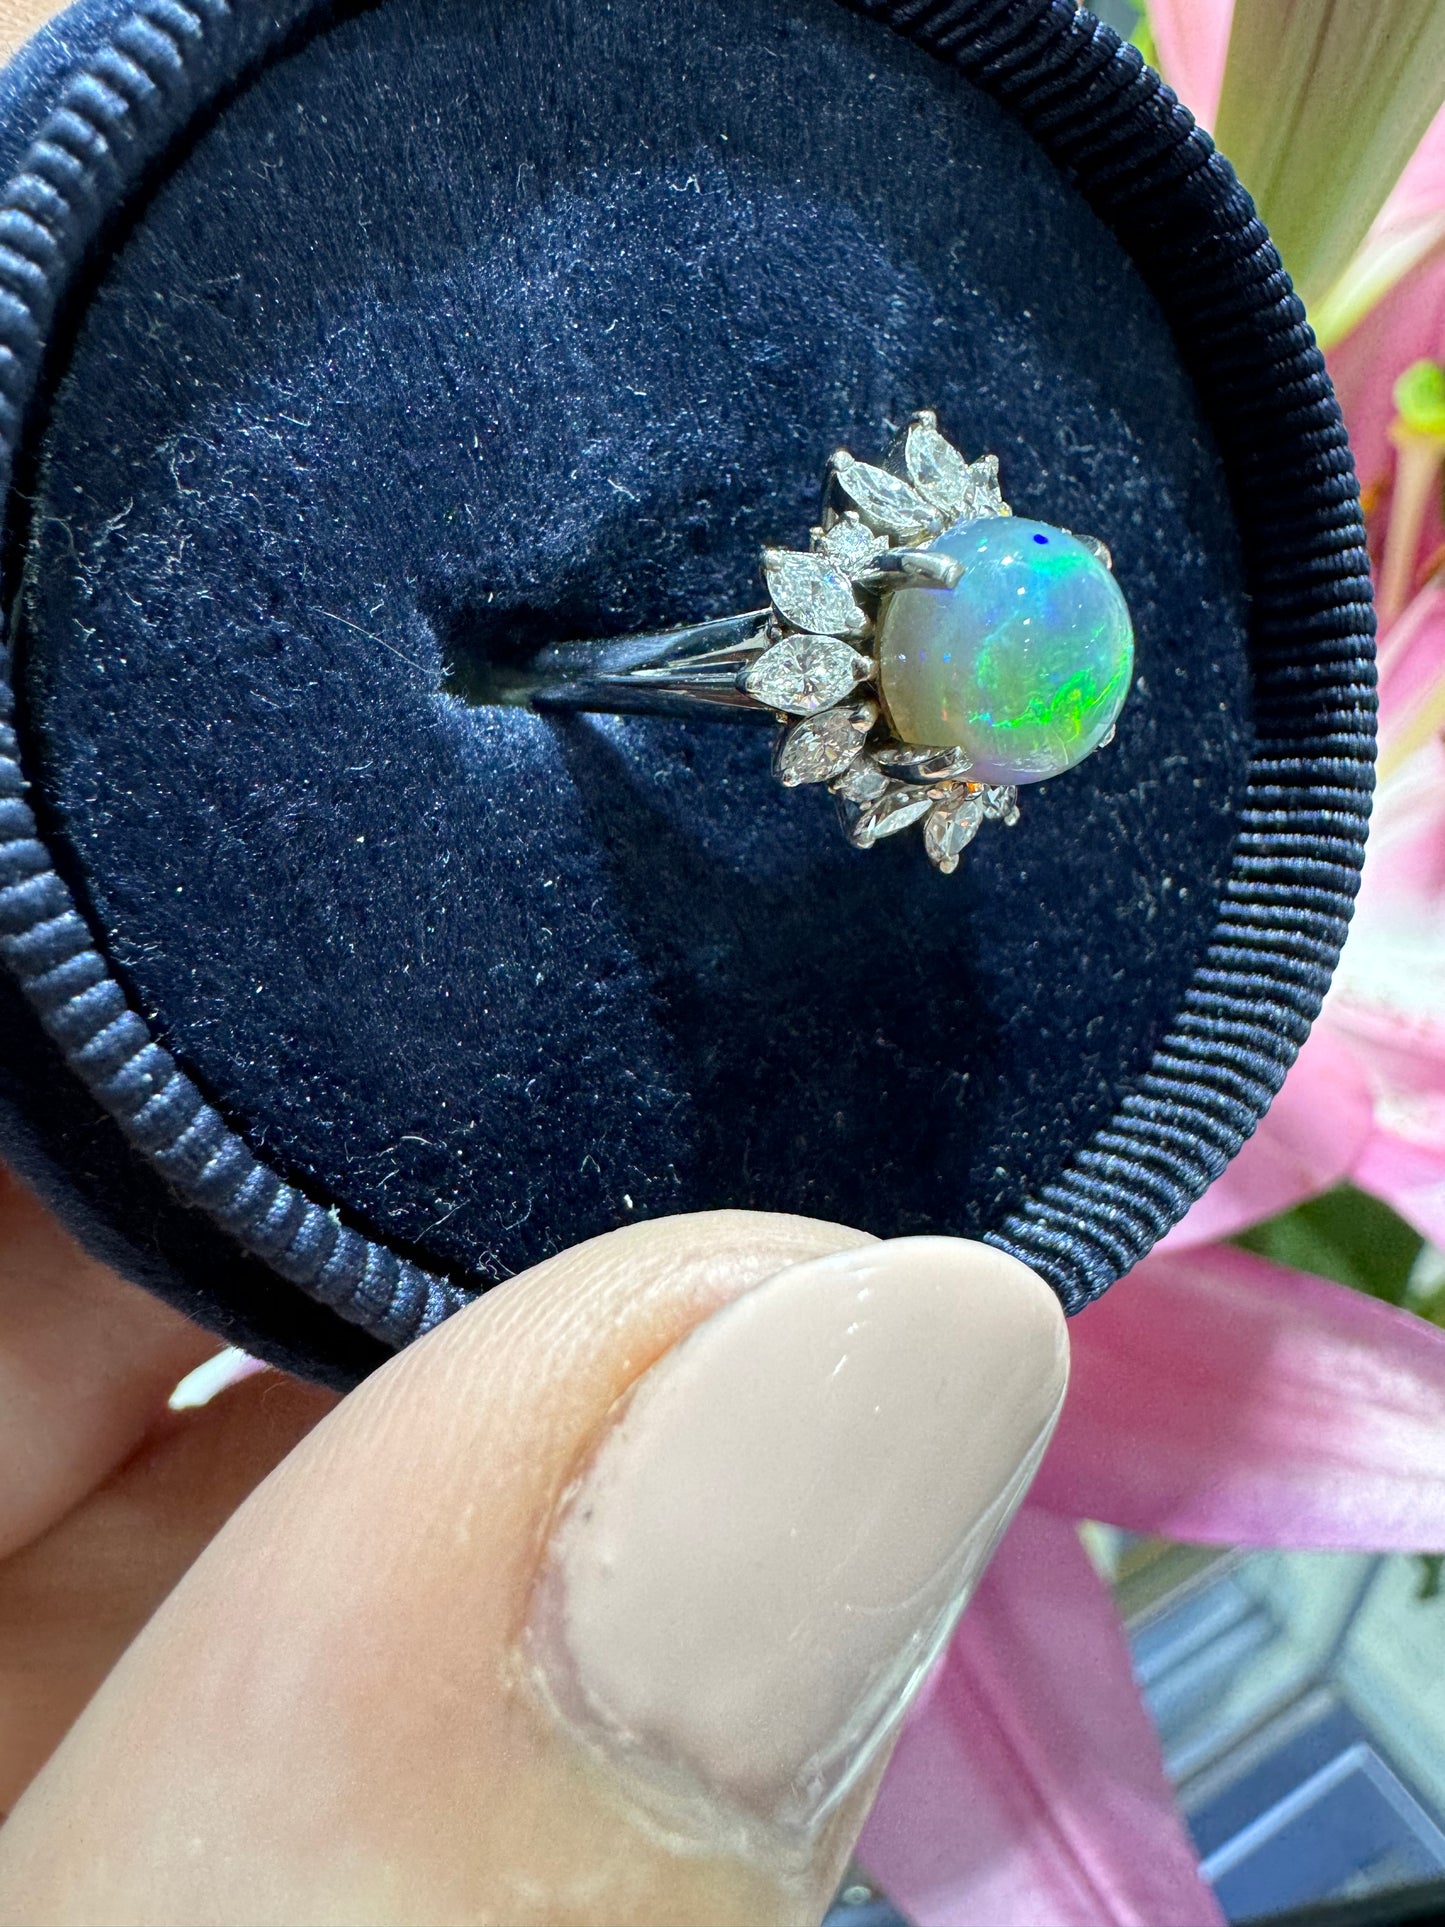 Australian Black Opal Ring